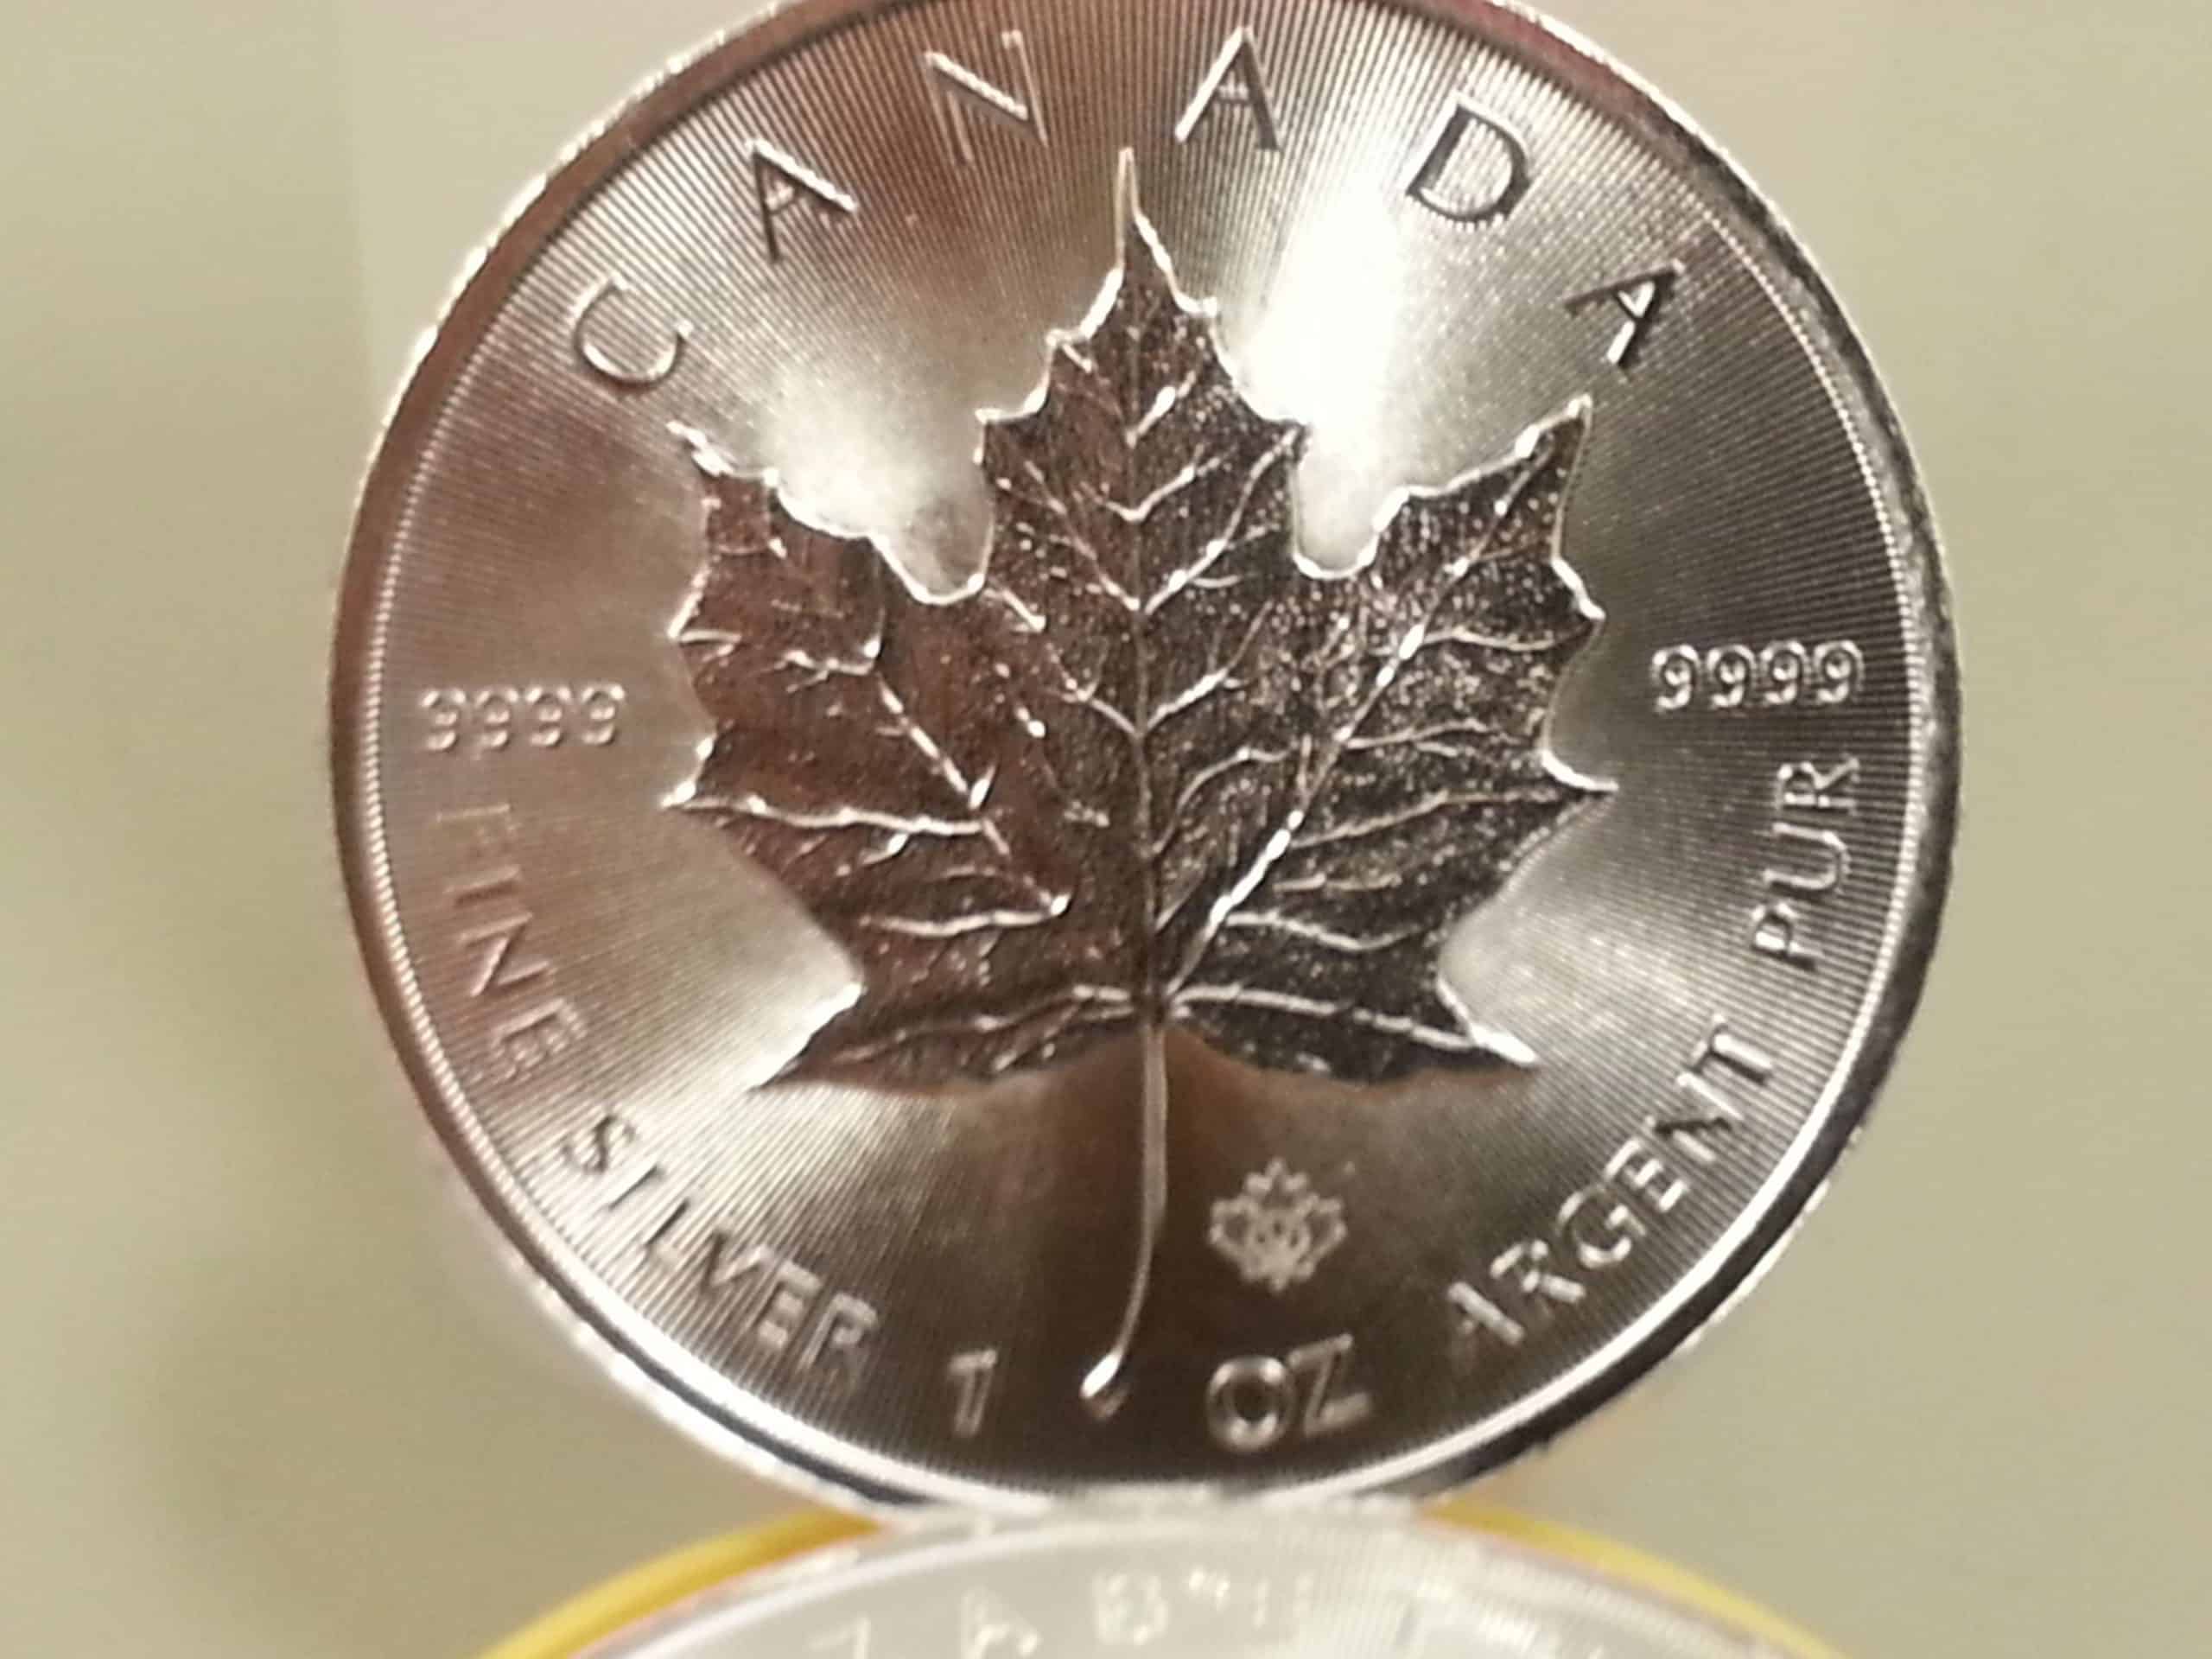 1 oz Silver Coins â âRCMâ Royal Canadian Mint â Canadian Silver Maple .9999 * Random Year 